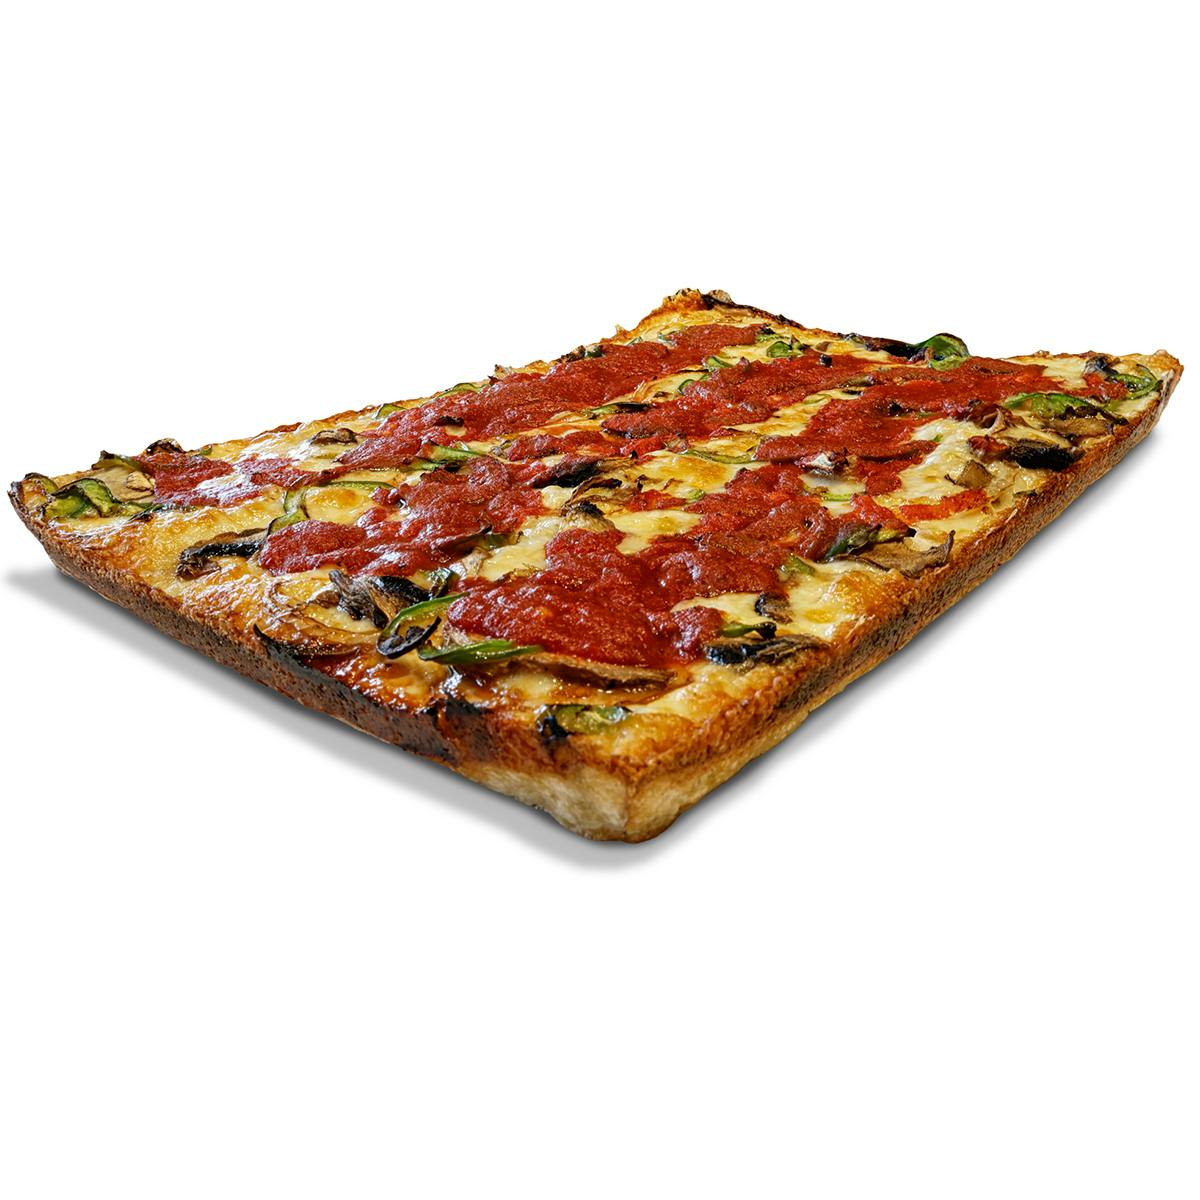 https://goldbelly.imgix.net/uploads/showcase_media_asset/image/181288/Buddys-Veggie-Pizza-1.jpg?ixlib=rails-3.0.2